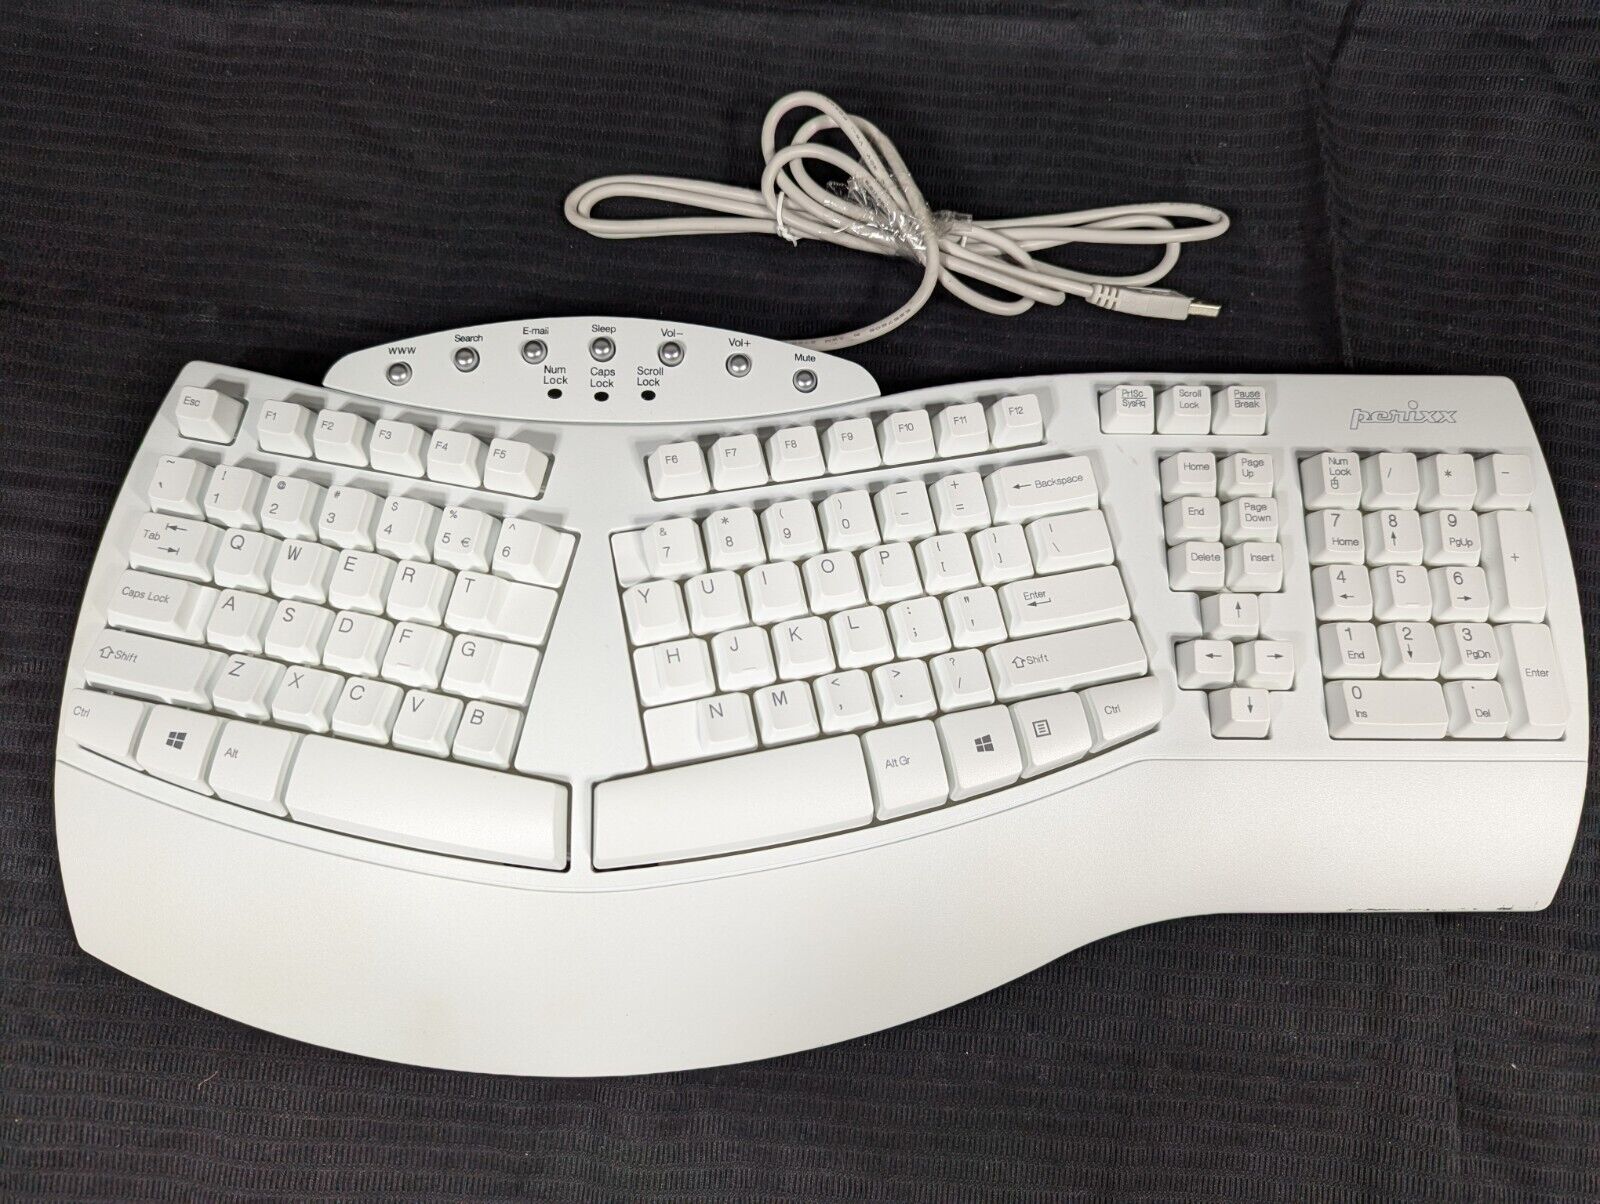 Perixx Periboard-512 Ergonomic Split Keyboard - Natural White - USB Type A